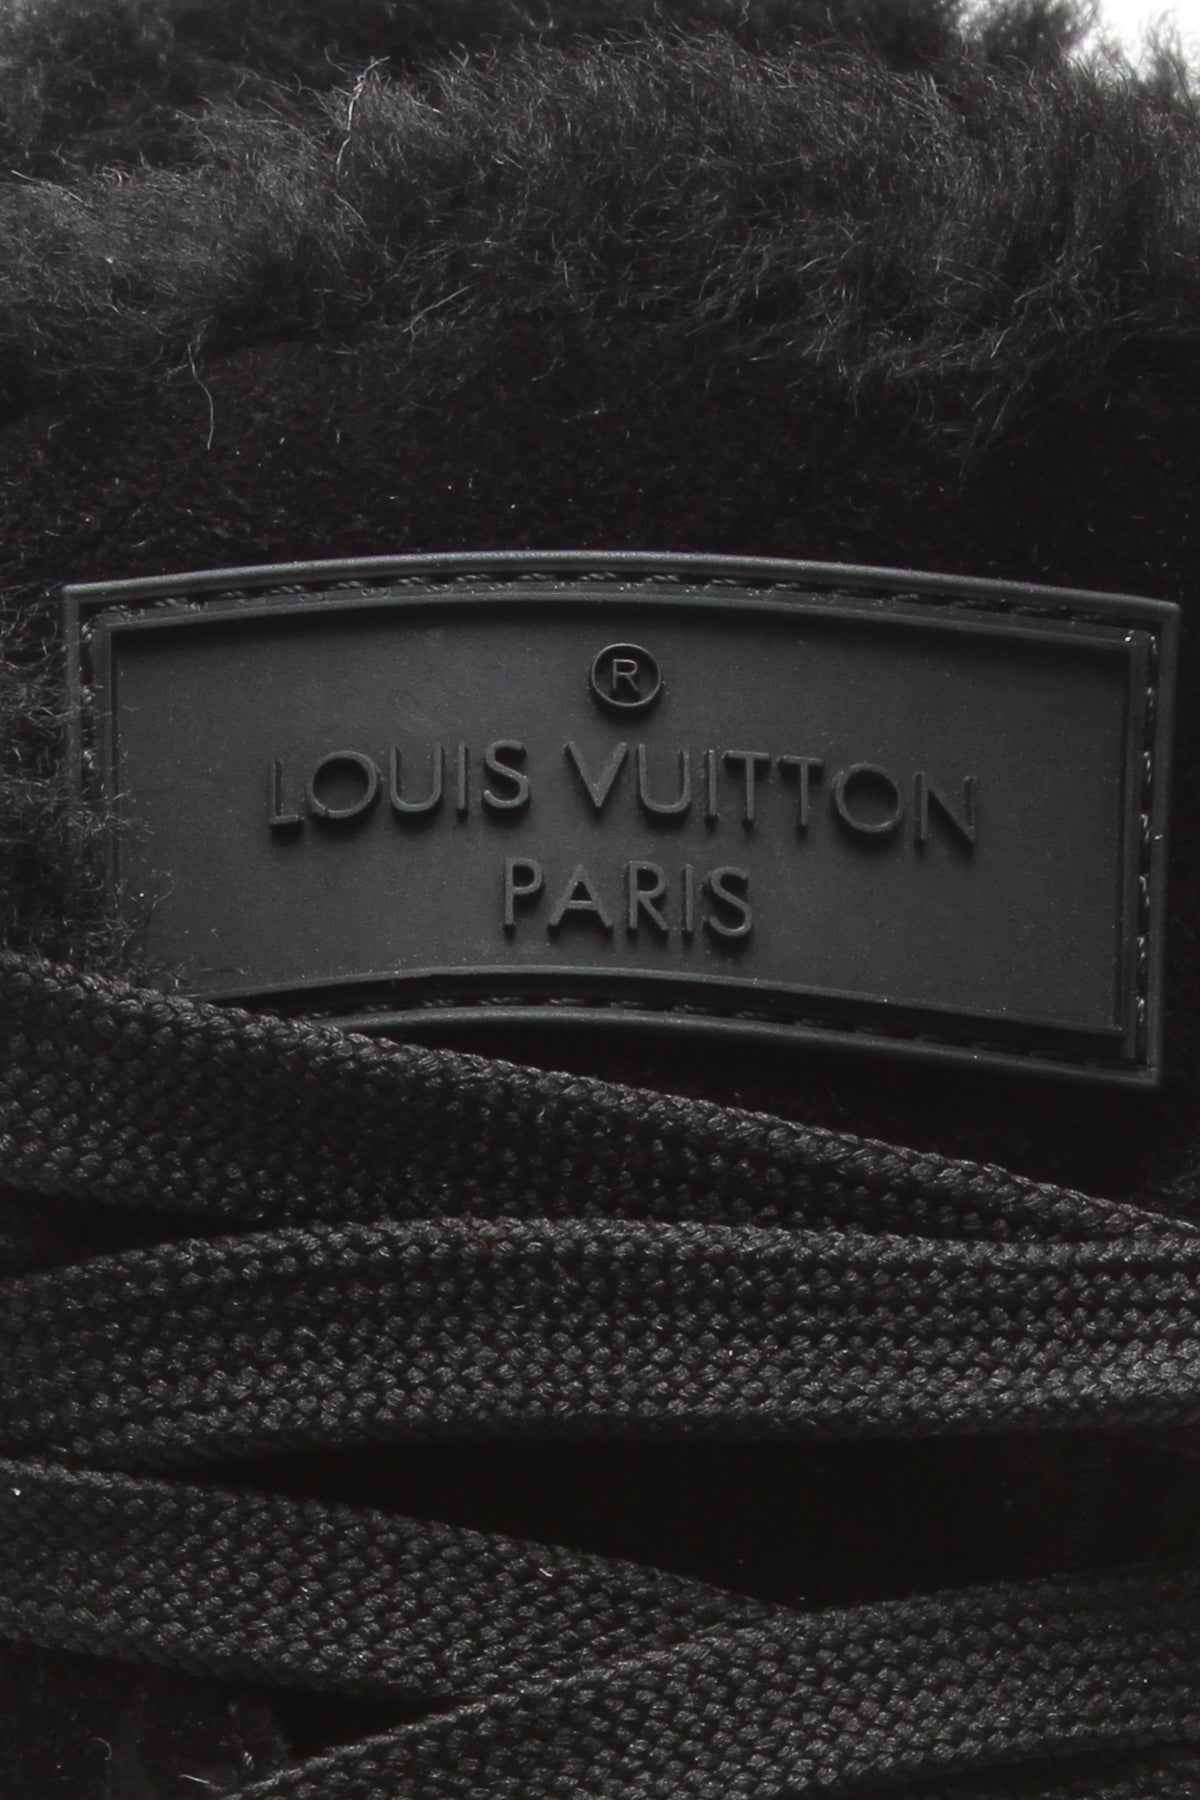 Louis Vuitton White Leather Low Top Sneakers Size 41 Louis Vuitton